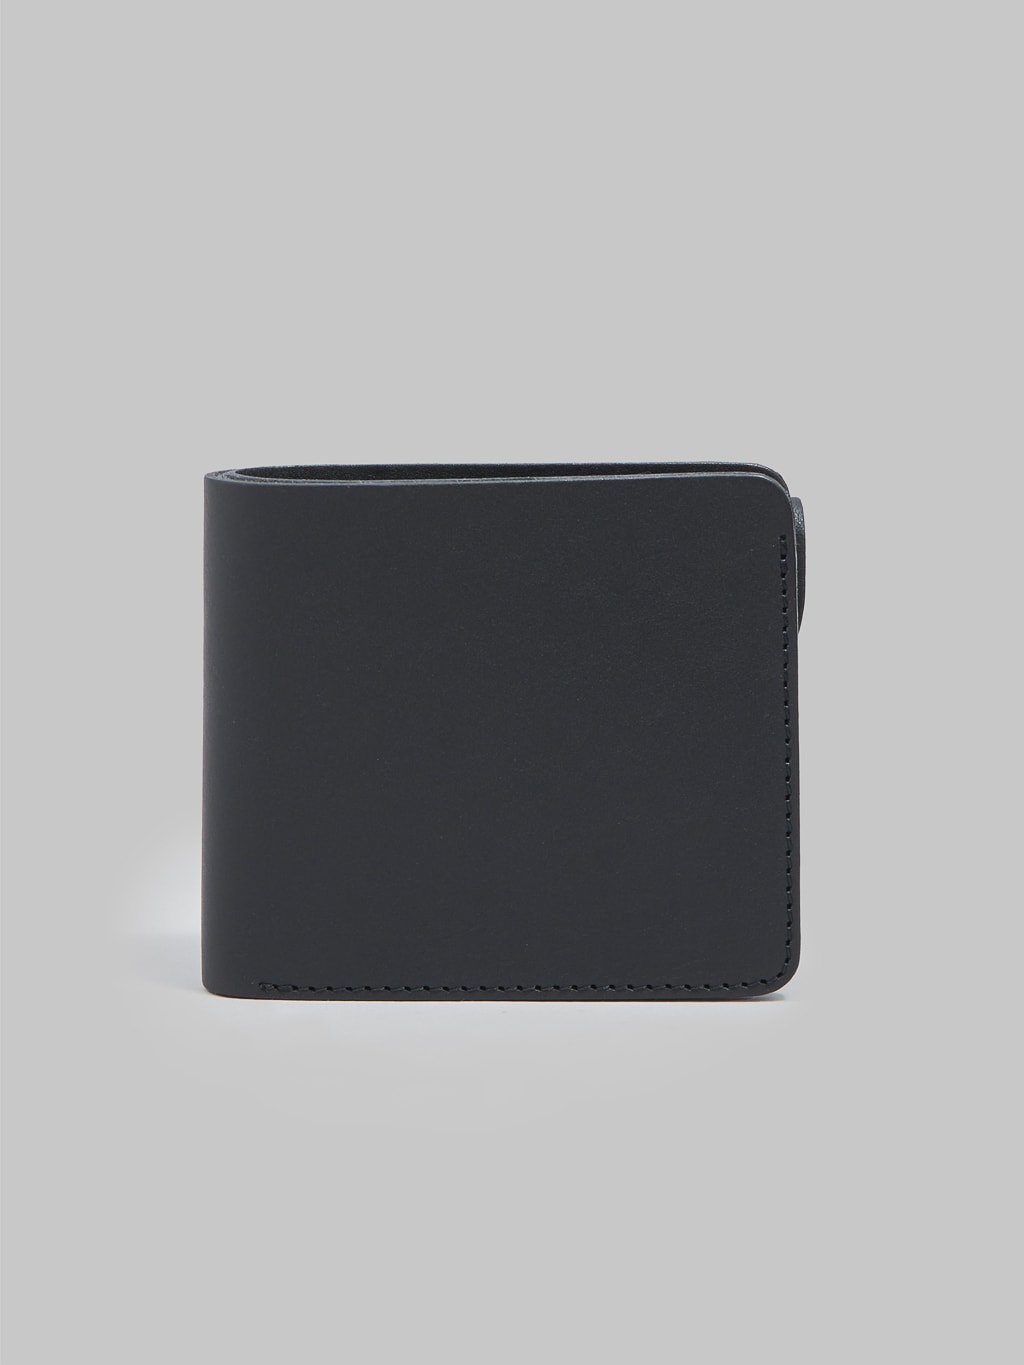 Kobashi Studio premium Leather Fold Wallet Black